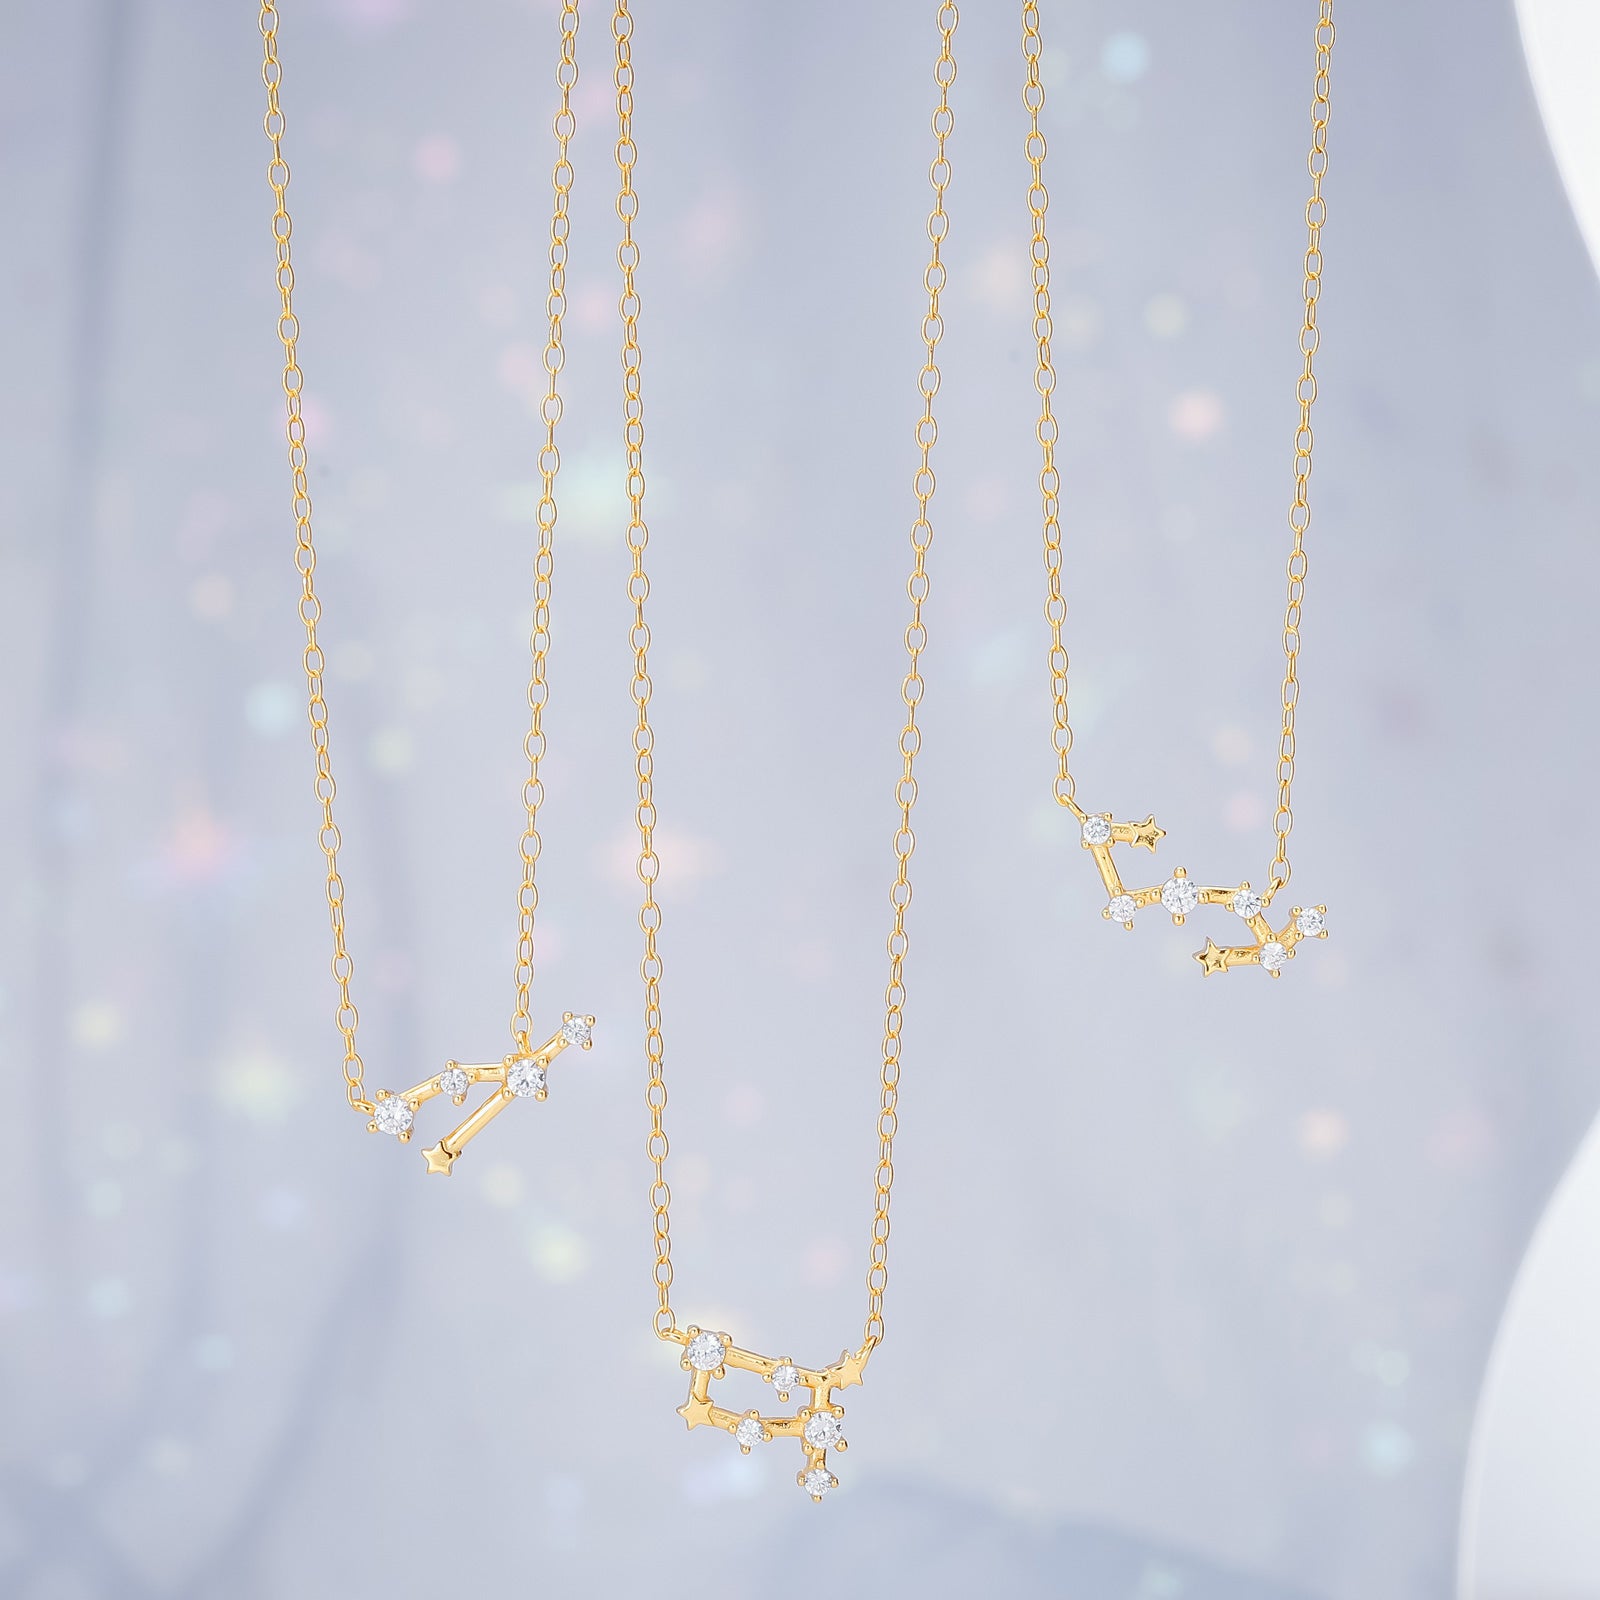 Silver Gemini Constellation Necklace Set